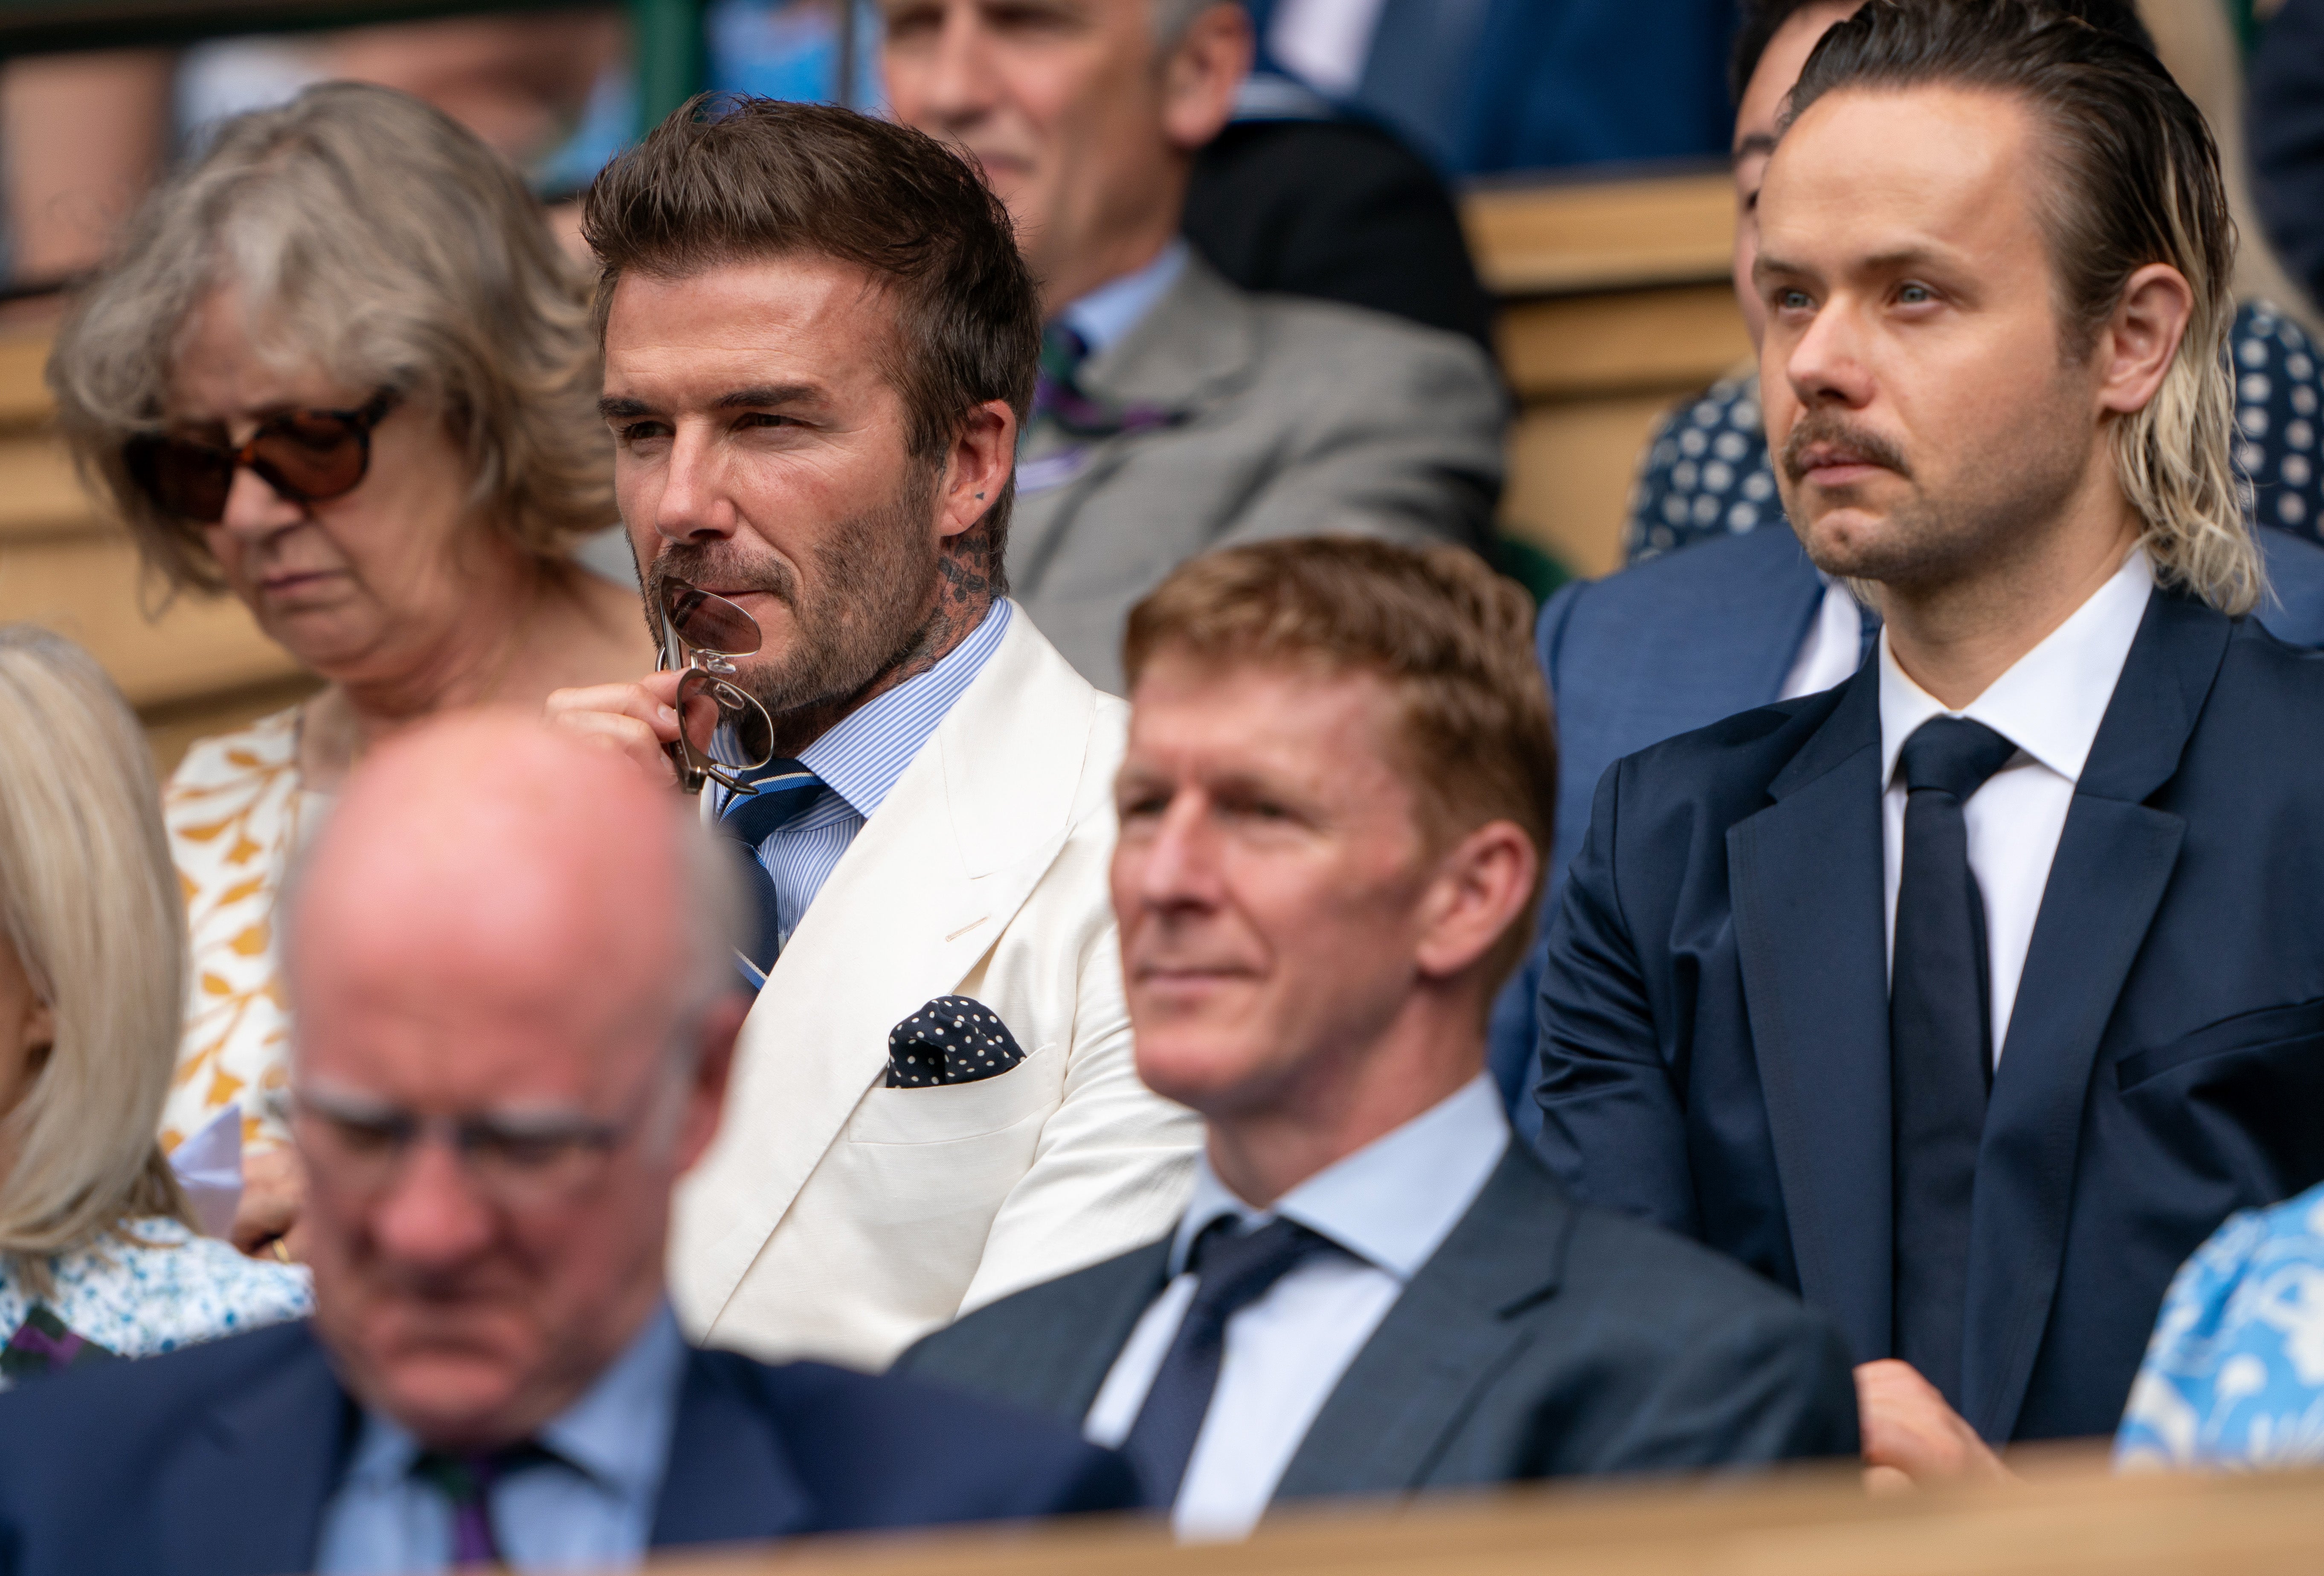 David Beckham and Tim Peake in the Royal Box at Wimbledon on Friday 9 July